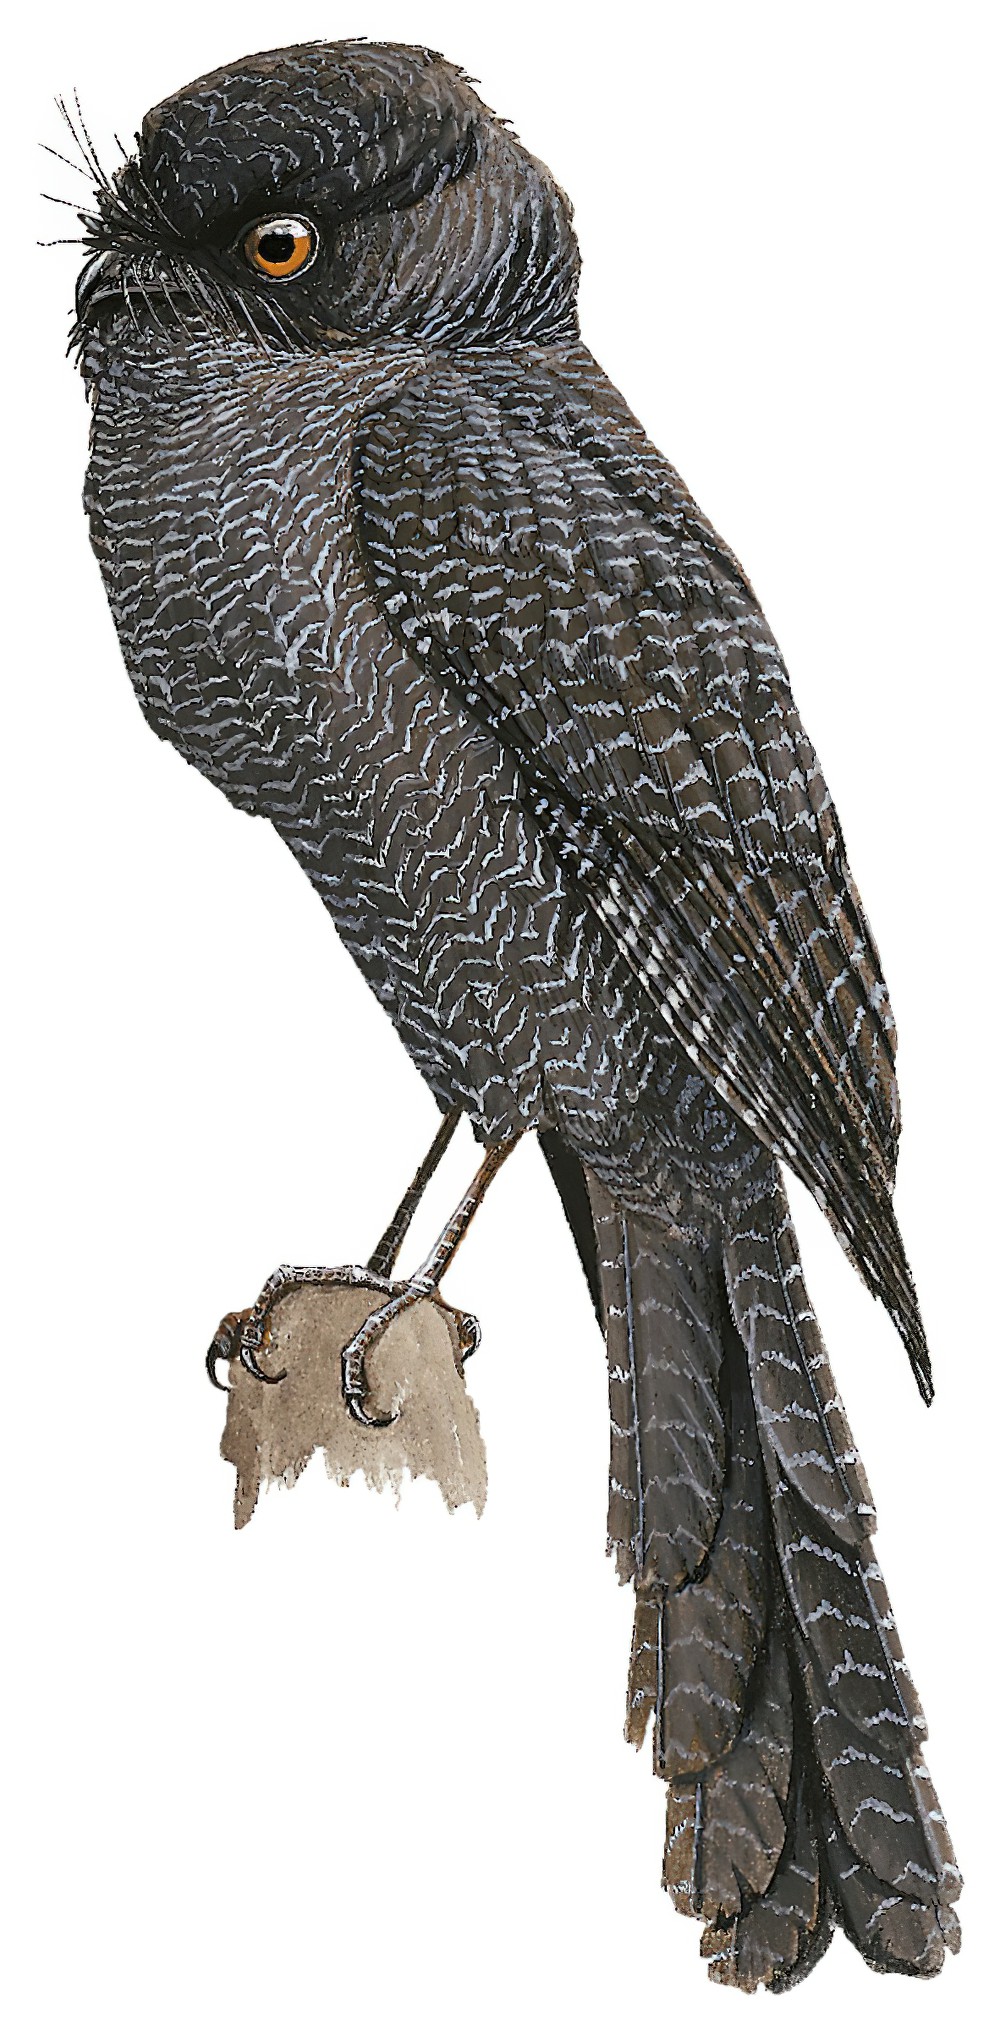 New Caledonian Owlet-nightjar / Aegotheles savesi